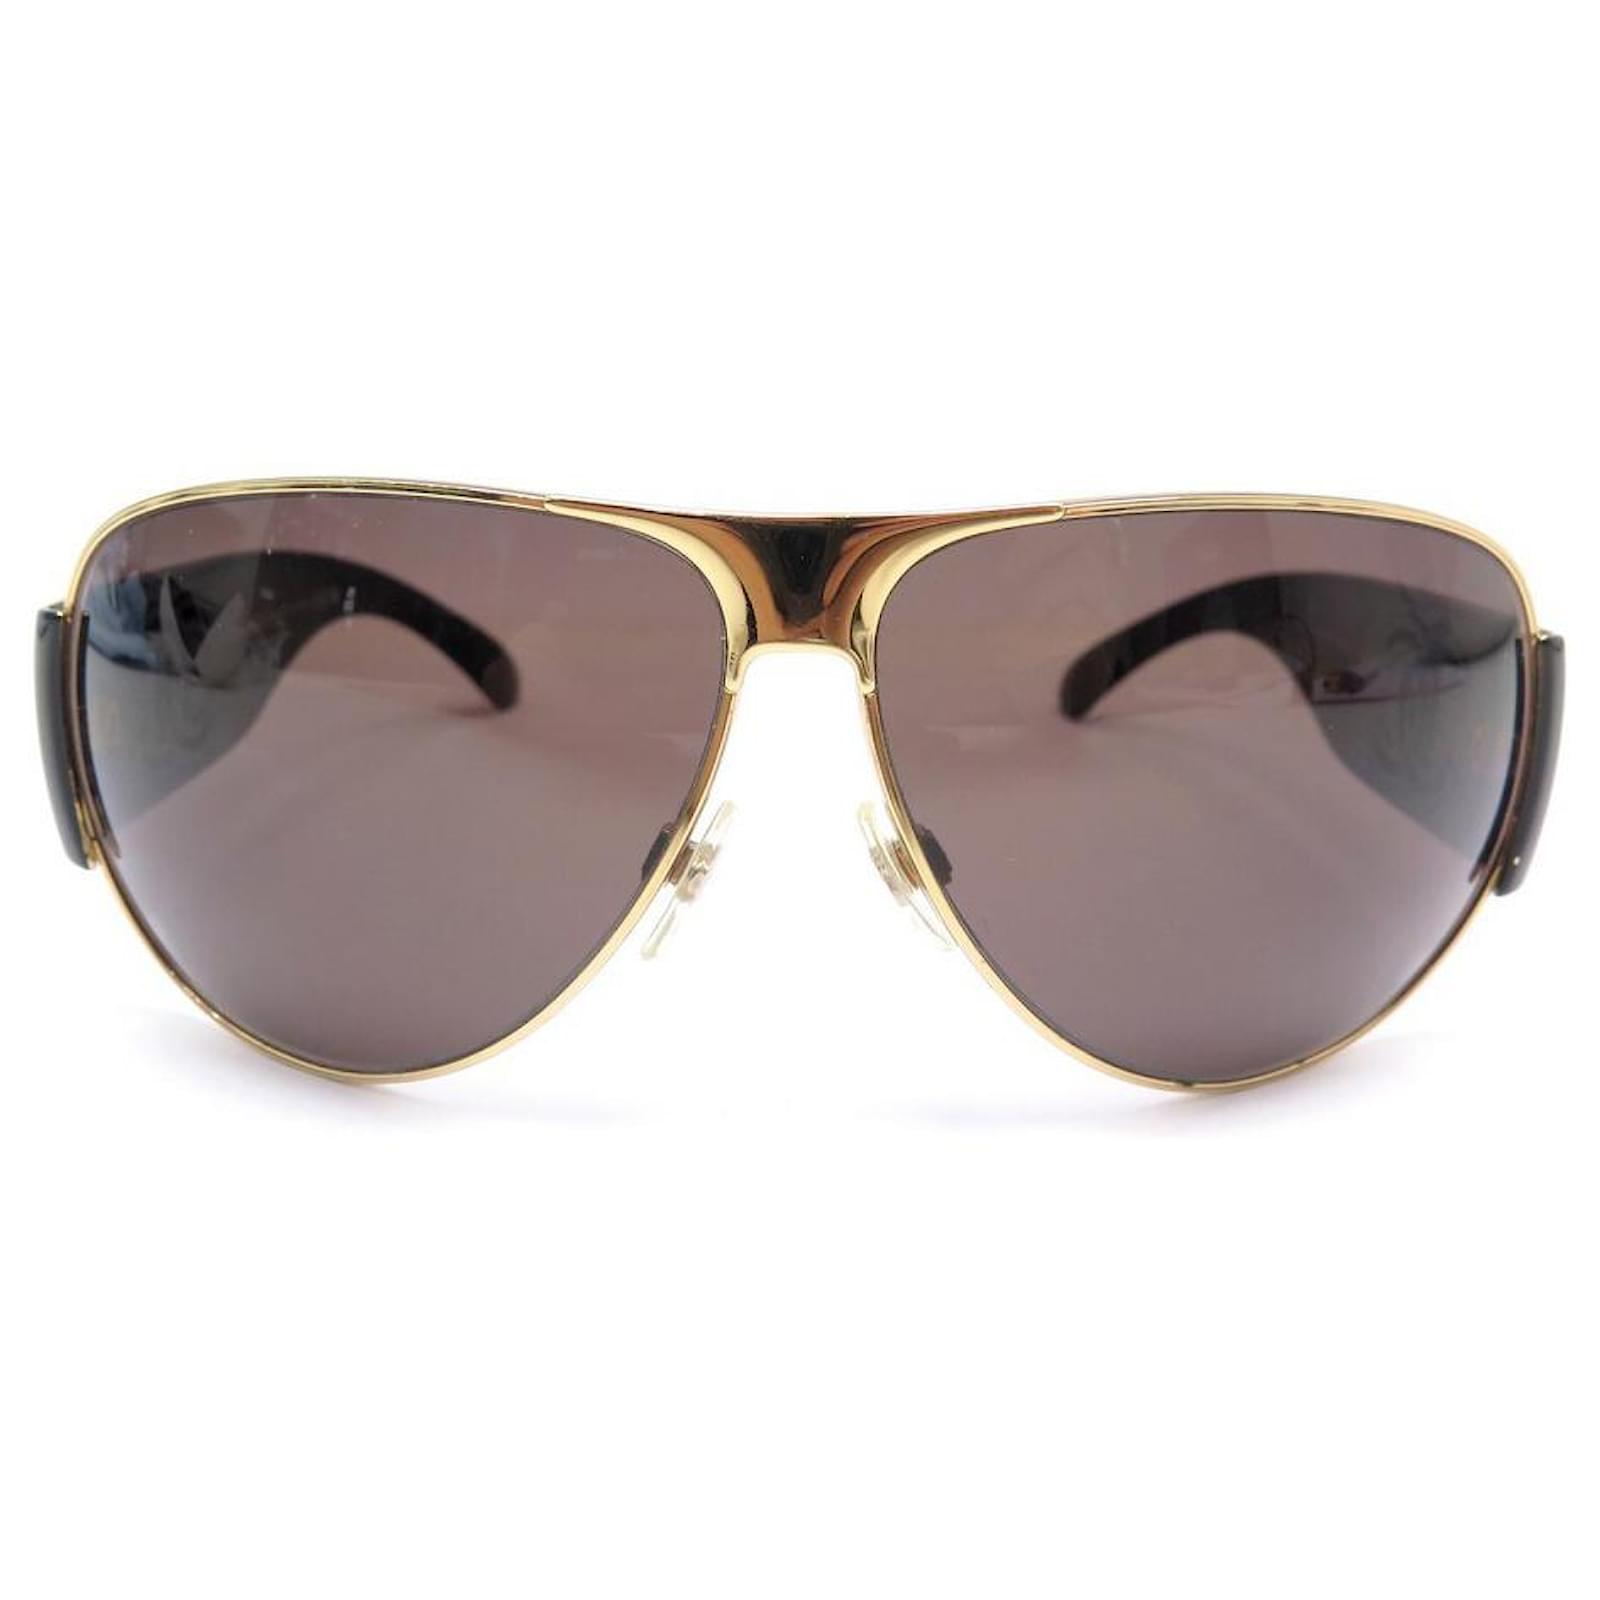 Chanel Brown Tortoise Aviator Sunglasses 5206  I MISS YOU VINTAGE